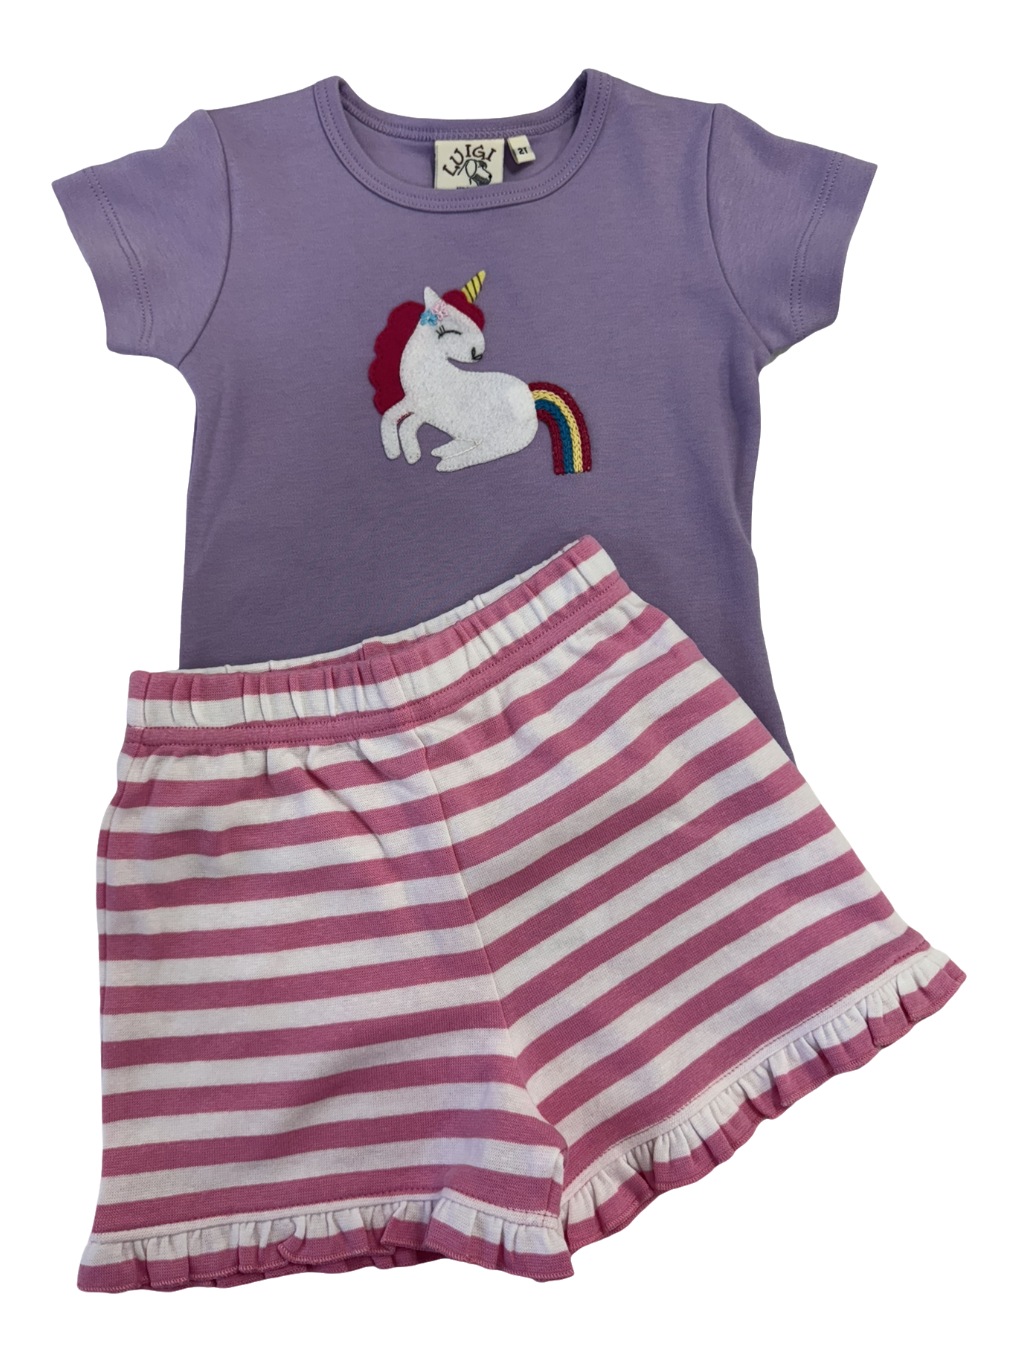 Girls Lavender T-Shirt with Unicorn and Striped Ruffle Shorts Light Bubblegum Set